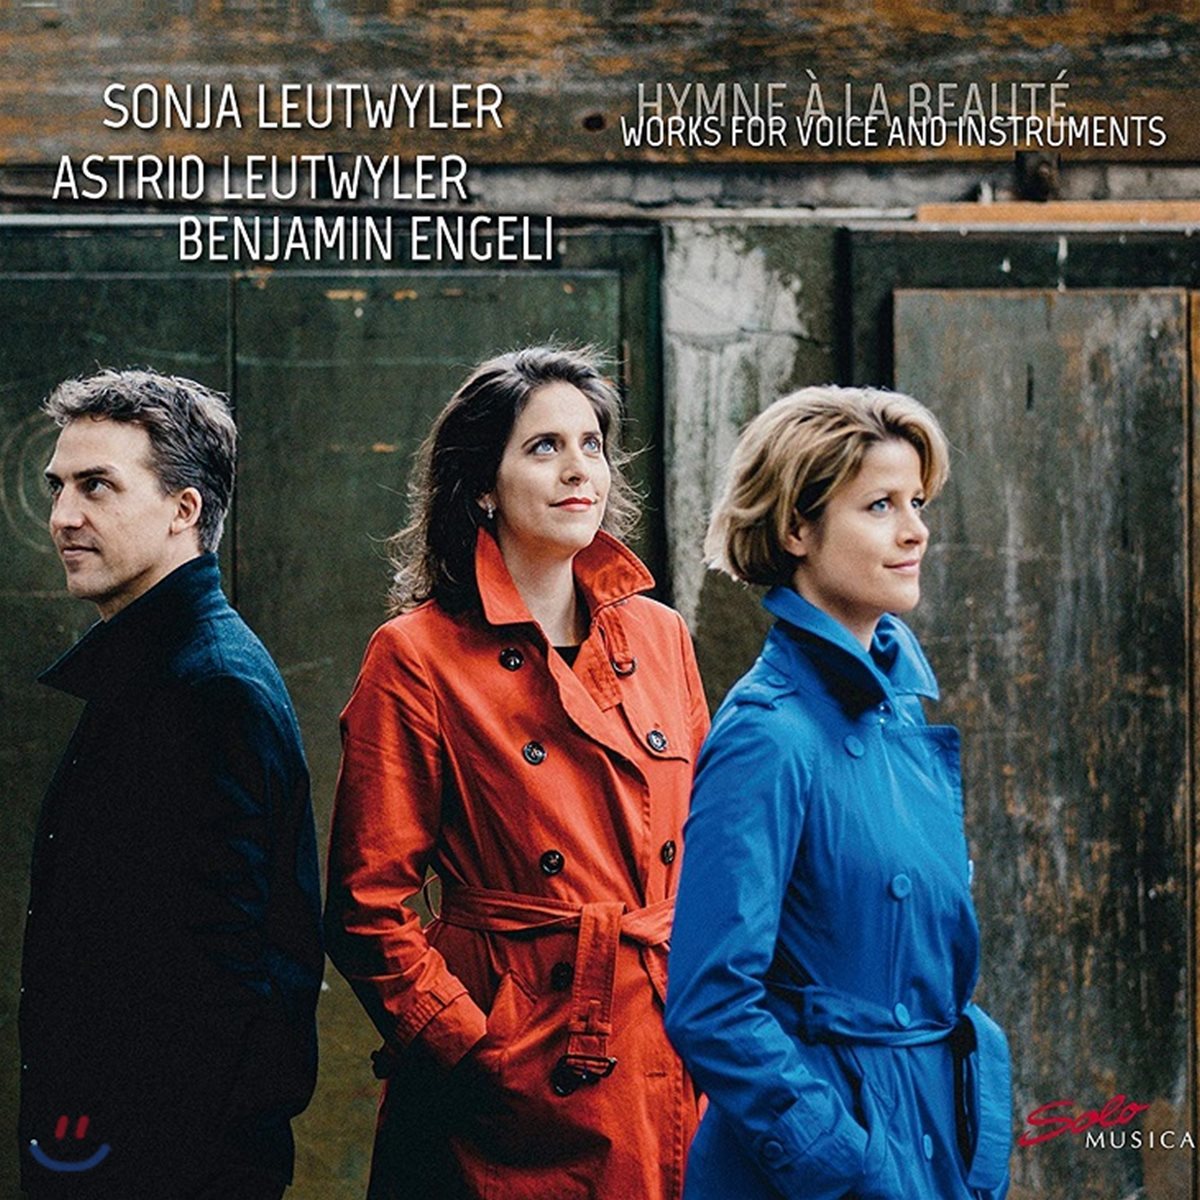 Sonja Leutwyler / Astrid Leutwyler 미의 예찬 - 인성과 기악을 위한 음악 (Hymne a la Beaute - Works for Voice and Instruments)